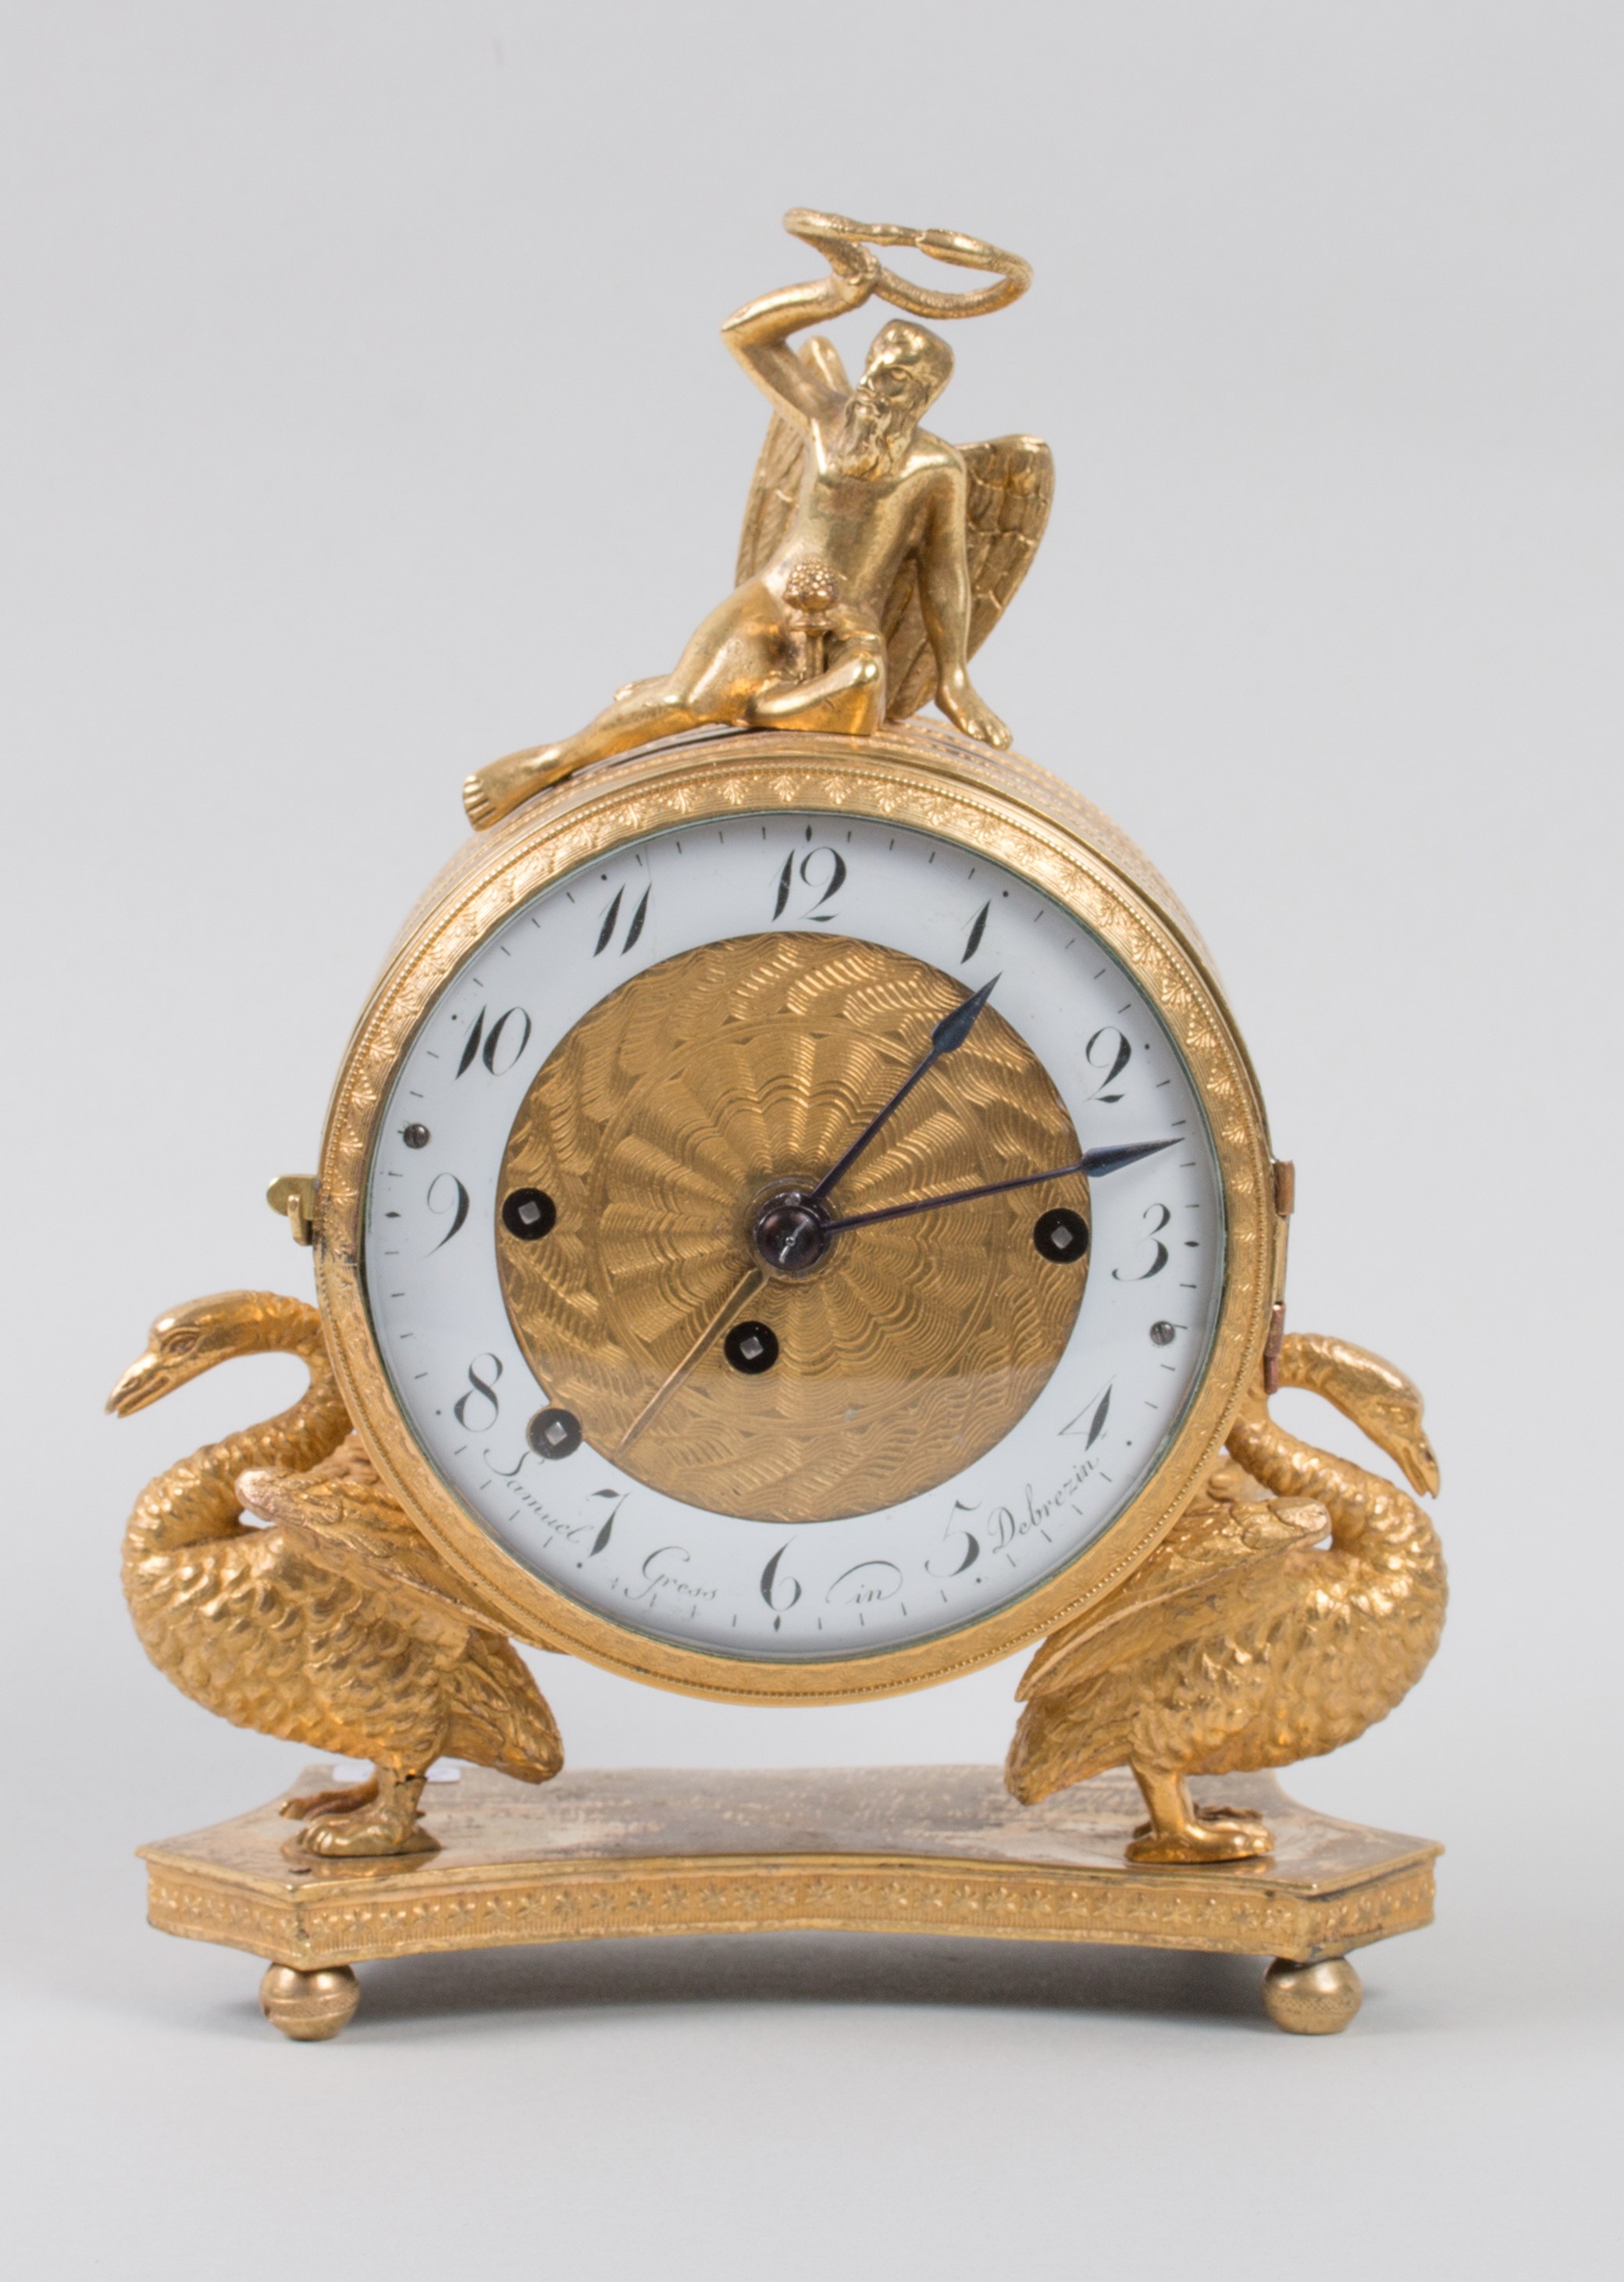 Carriage clock by Samuel Gress, c. 1820.